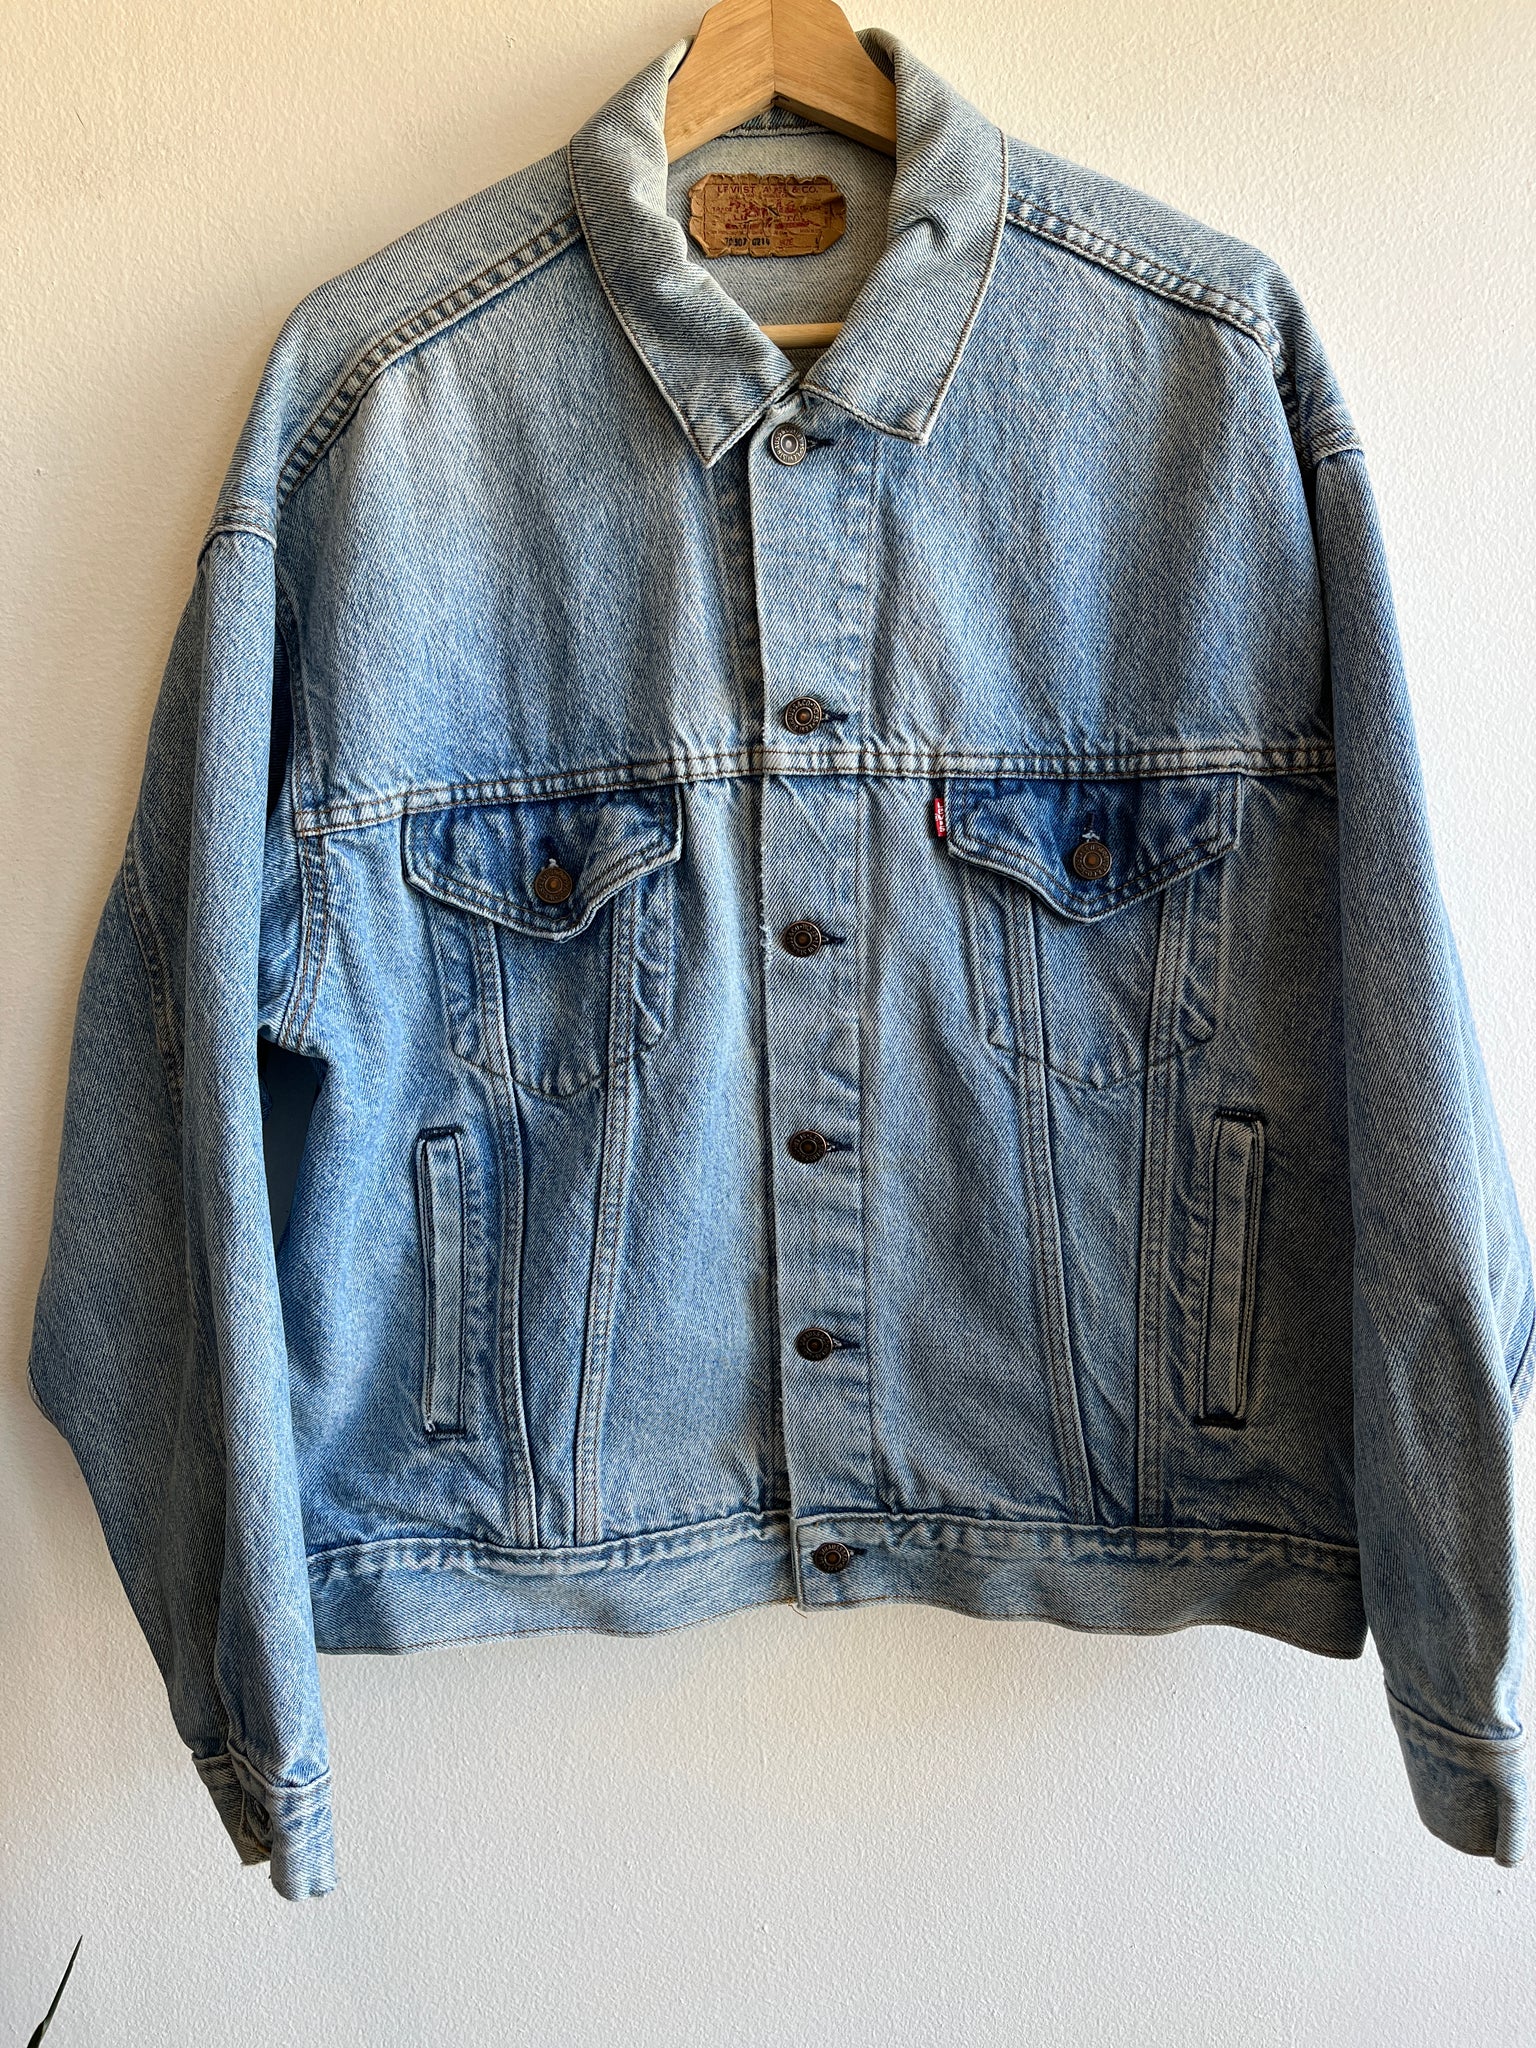 Vintage 1980’s Levi’s Type 4 denim trucker jacket